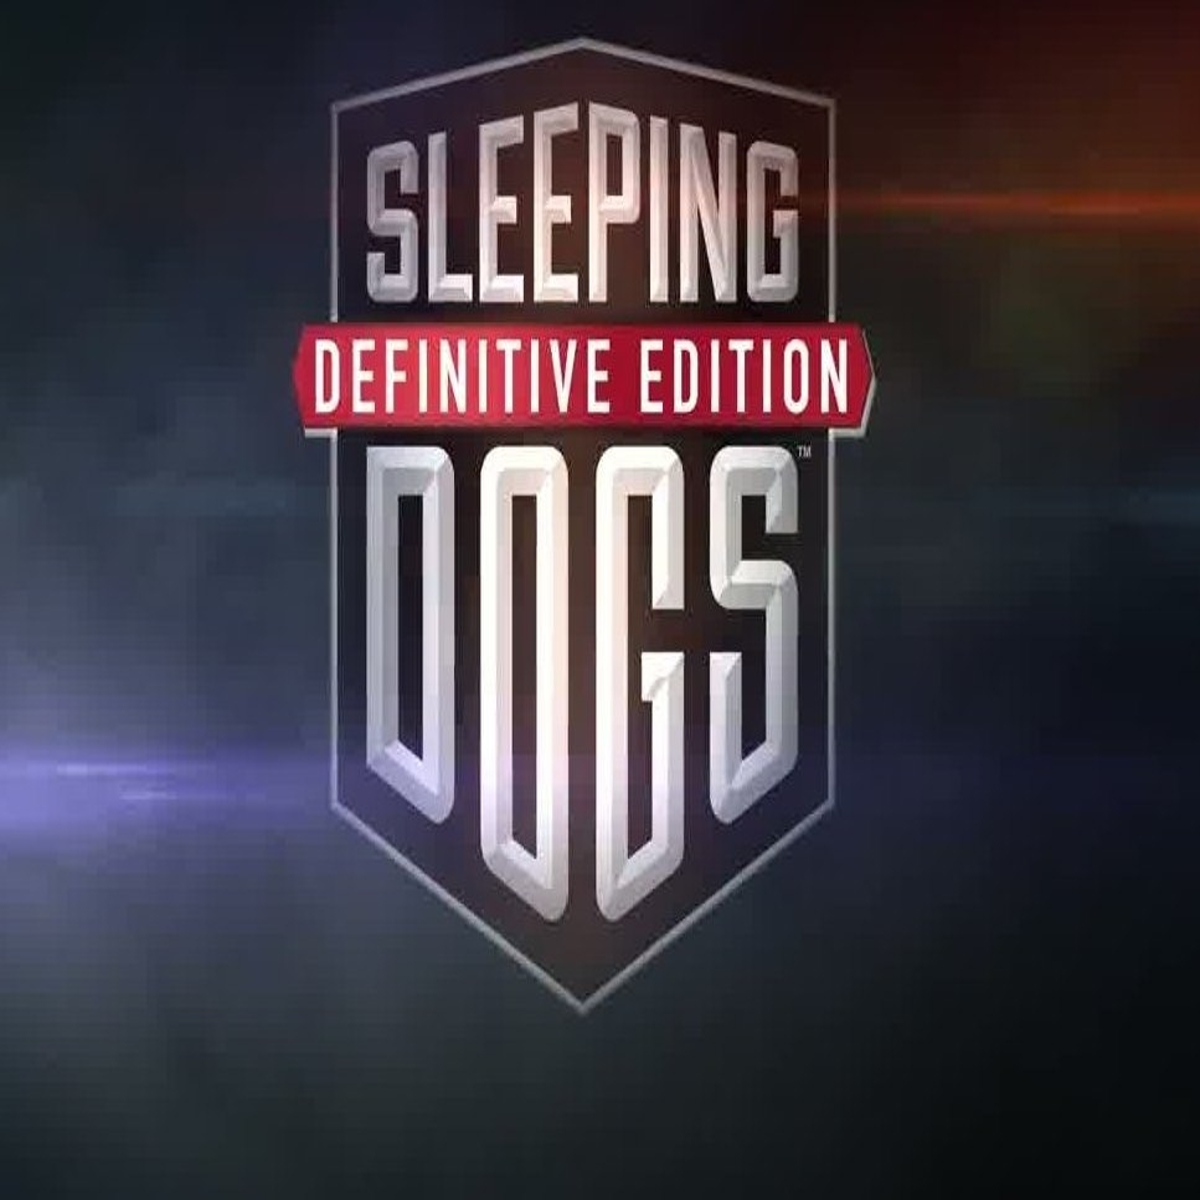 Sleeping Dogs Definitive Edition | Square Enix | GameStop